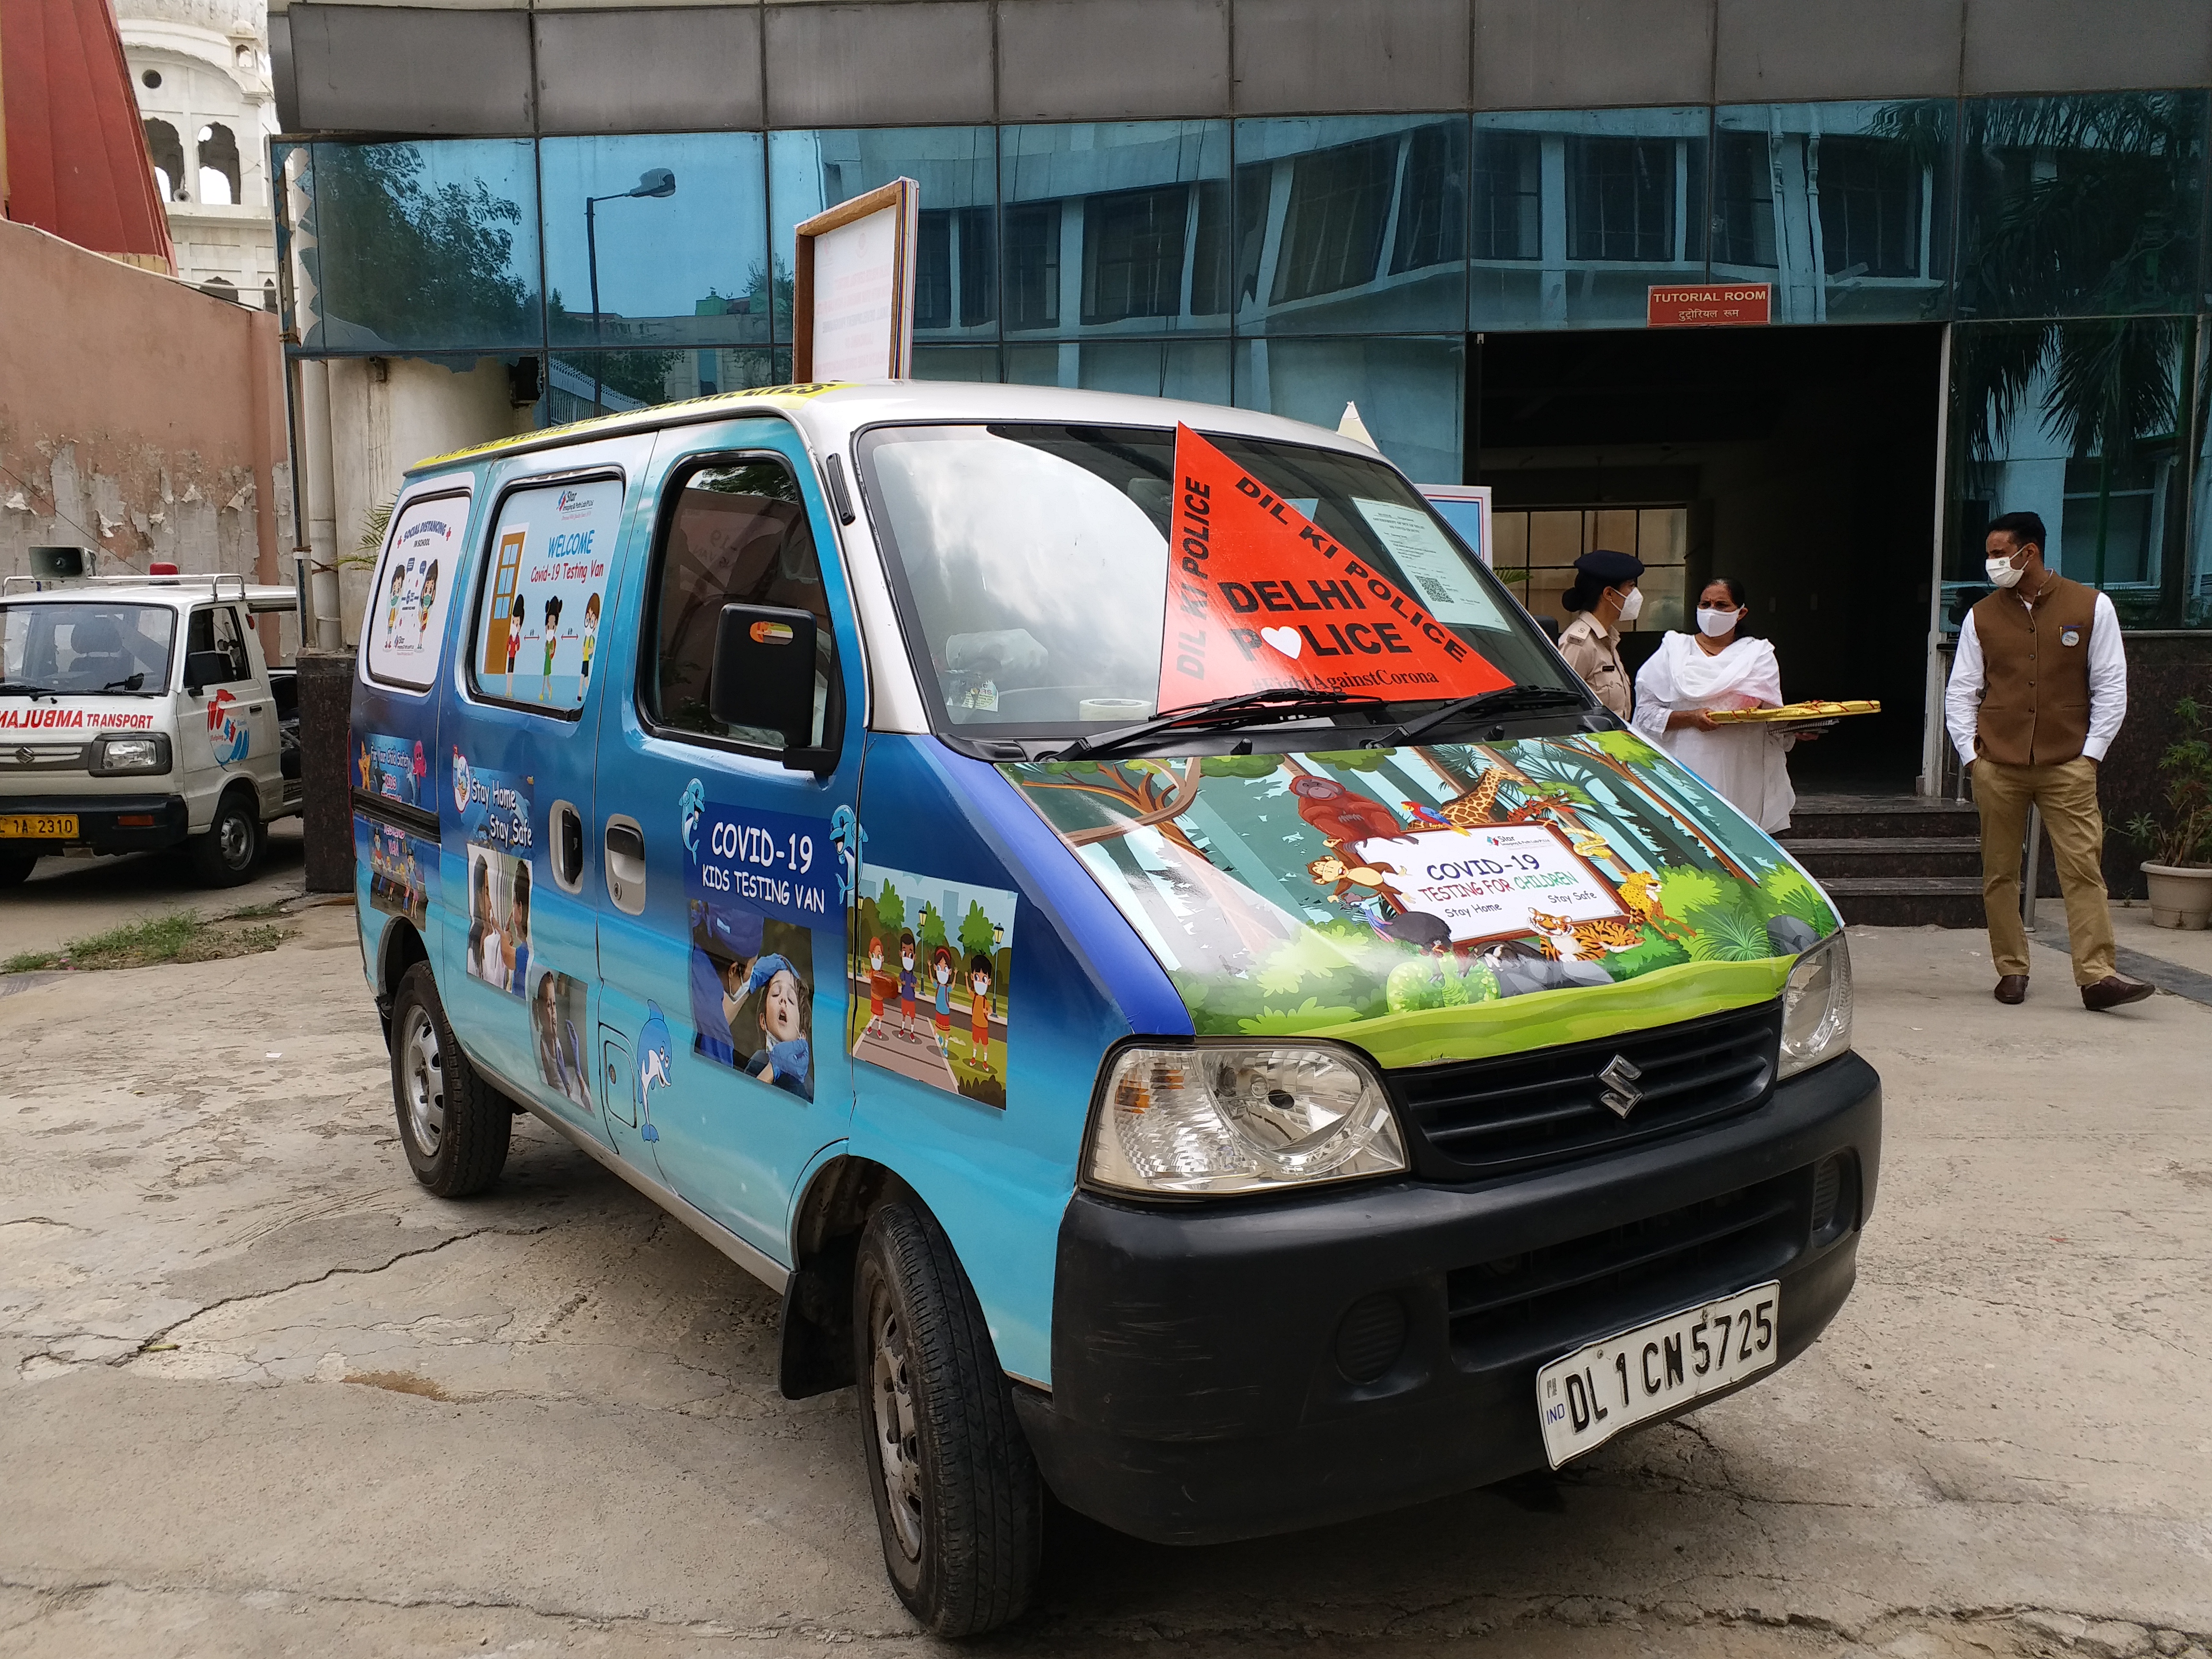 Delhi Police launches corona testing van for children